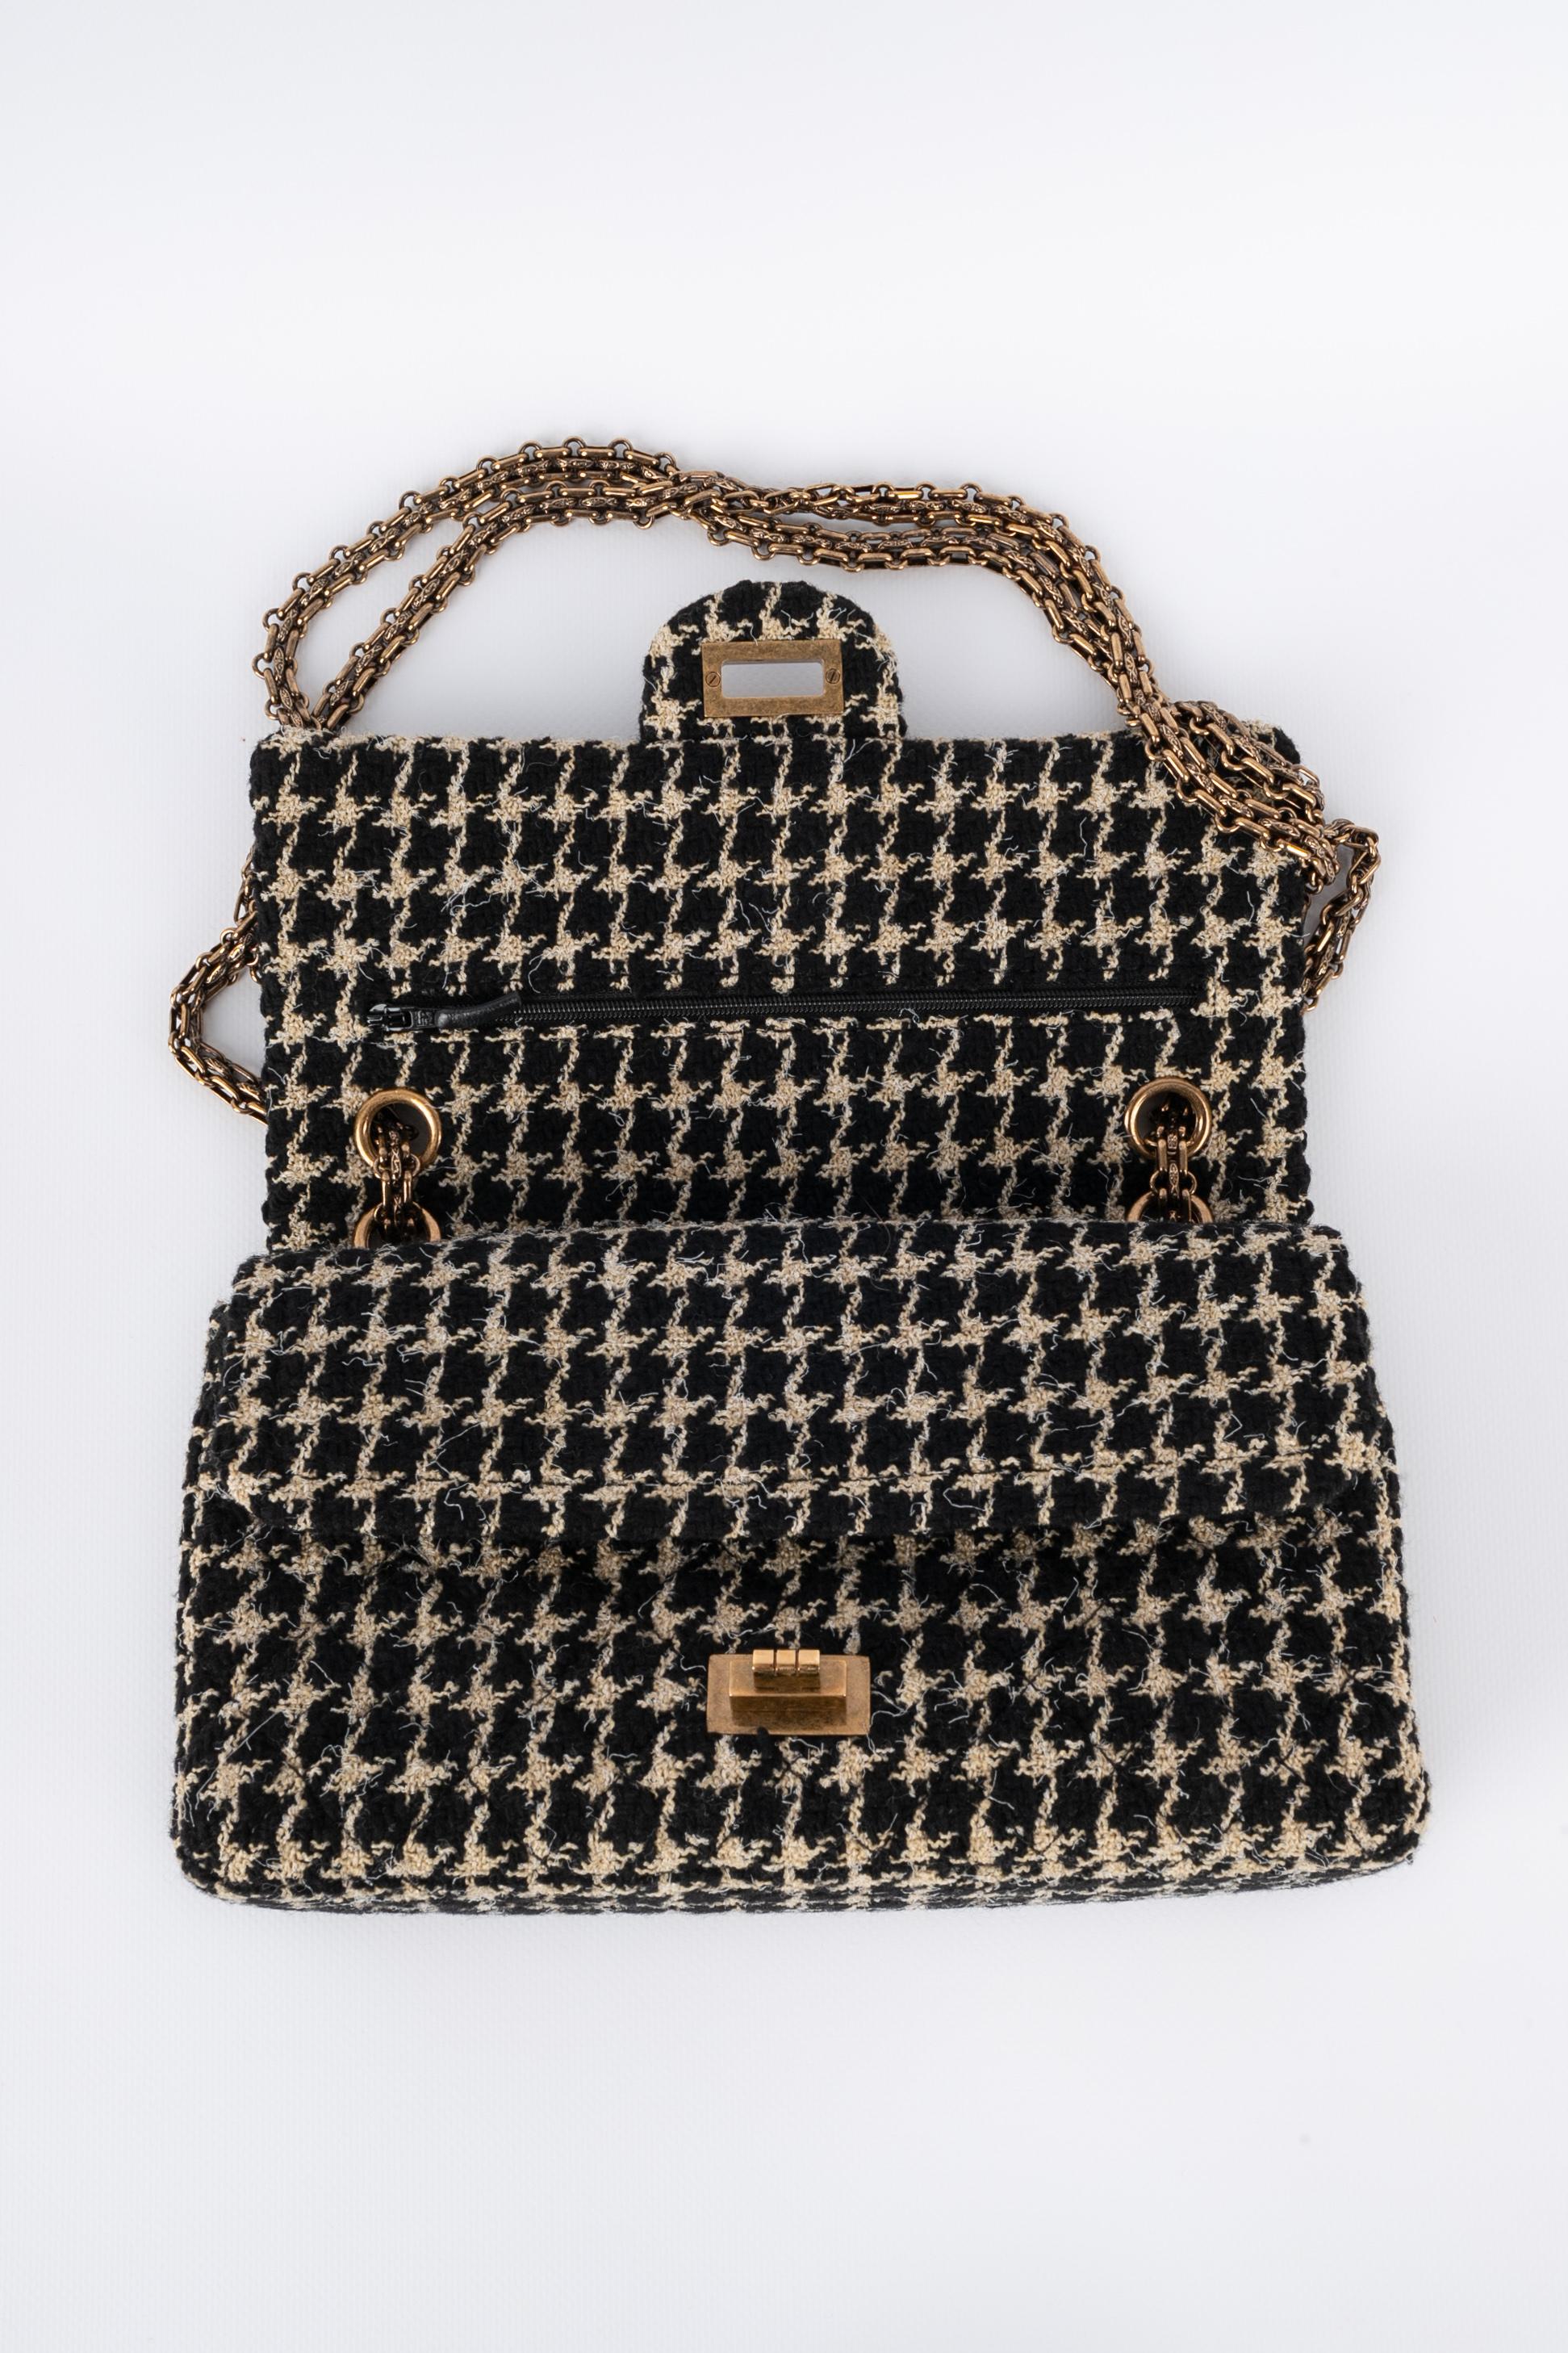 Chanel 2.55 bag 2015/2016 For Sale 6